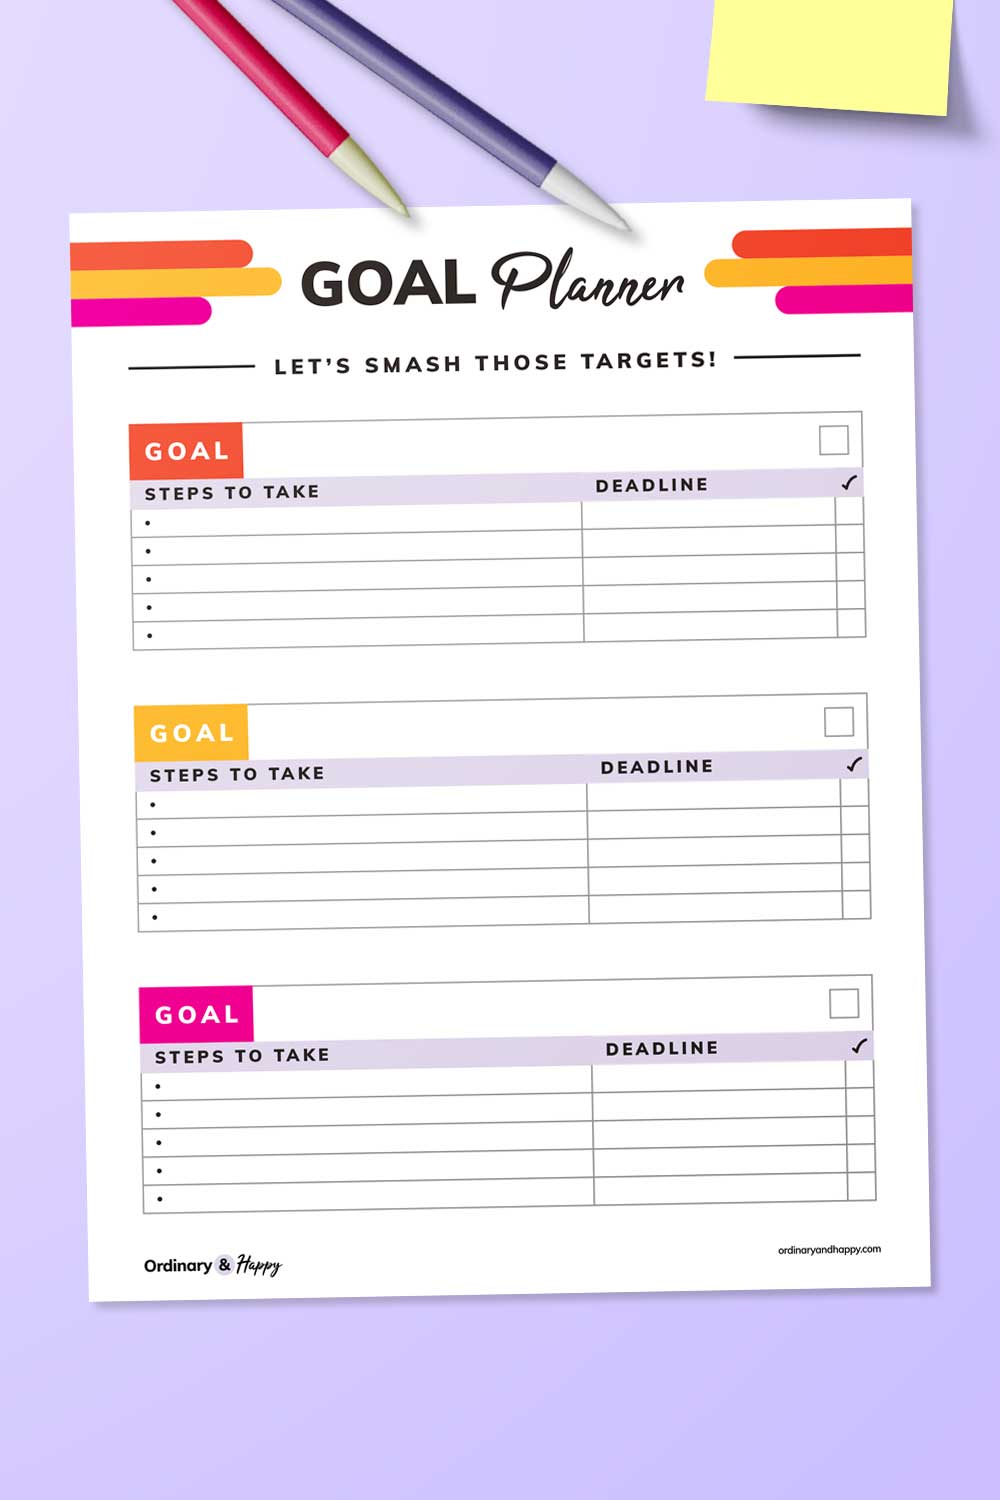 Goal Planner Printable (image).